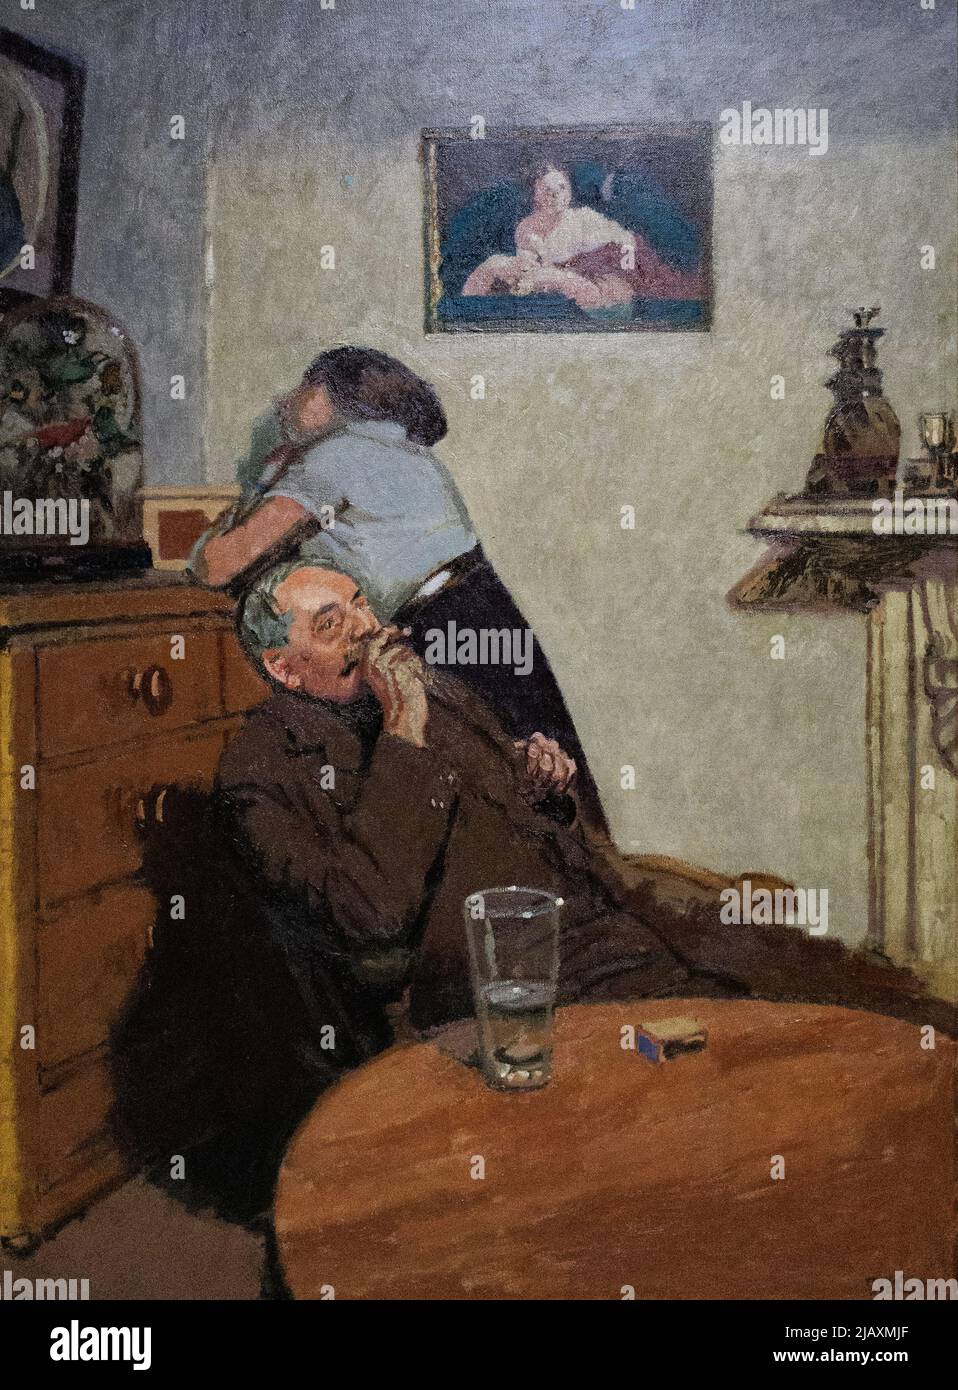 Post Impresionismo - Walter Sickert pintura; ennui ( aburrimiento ), 1914. Óleo sobre lienzo, arte post impresionista británico del siglo 20th Foto de stock